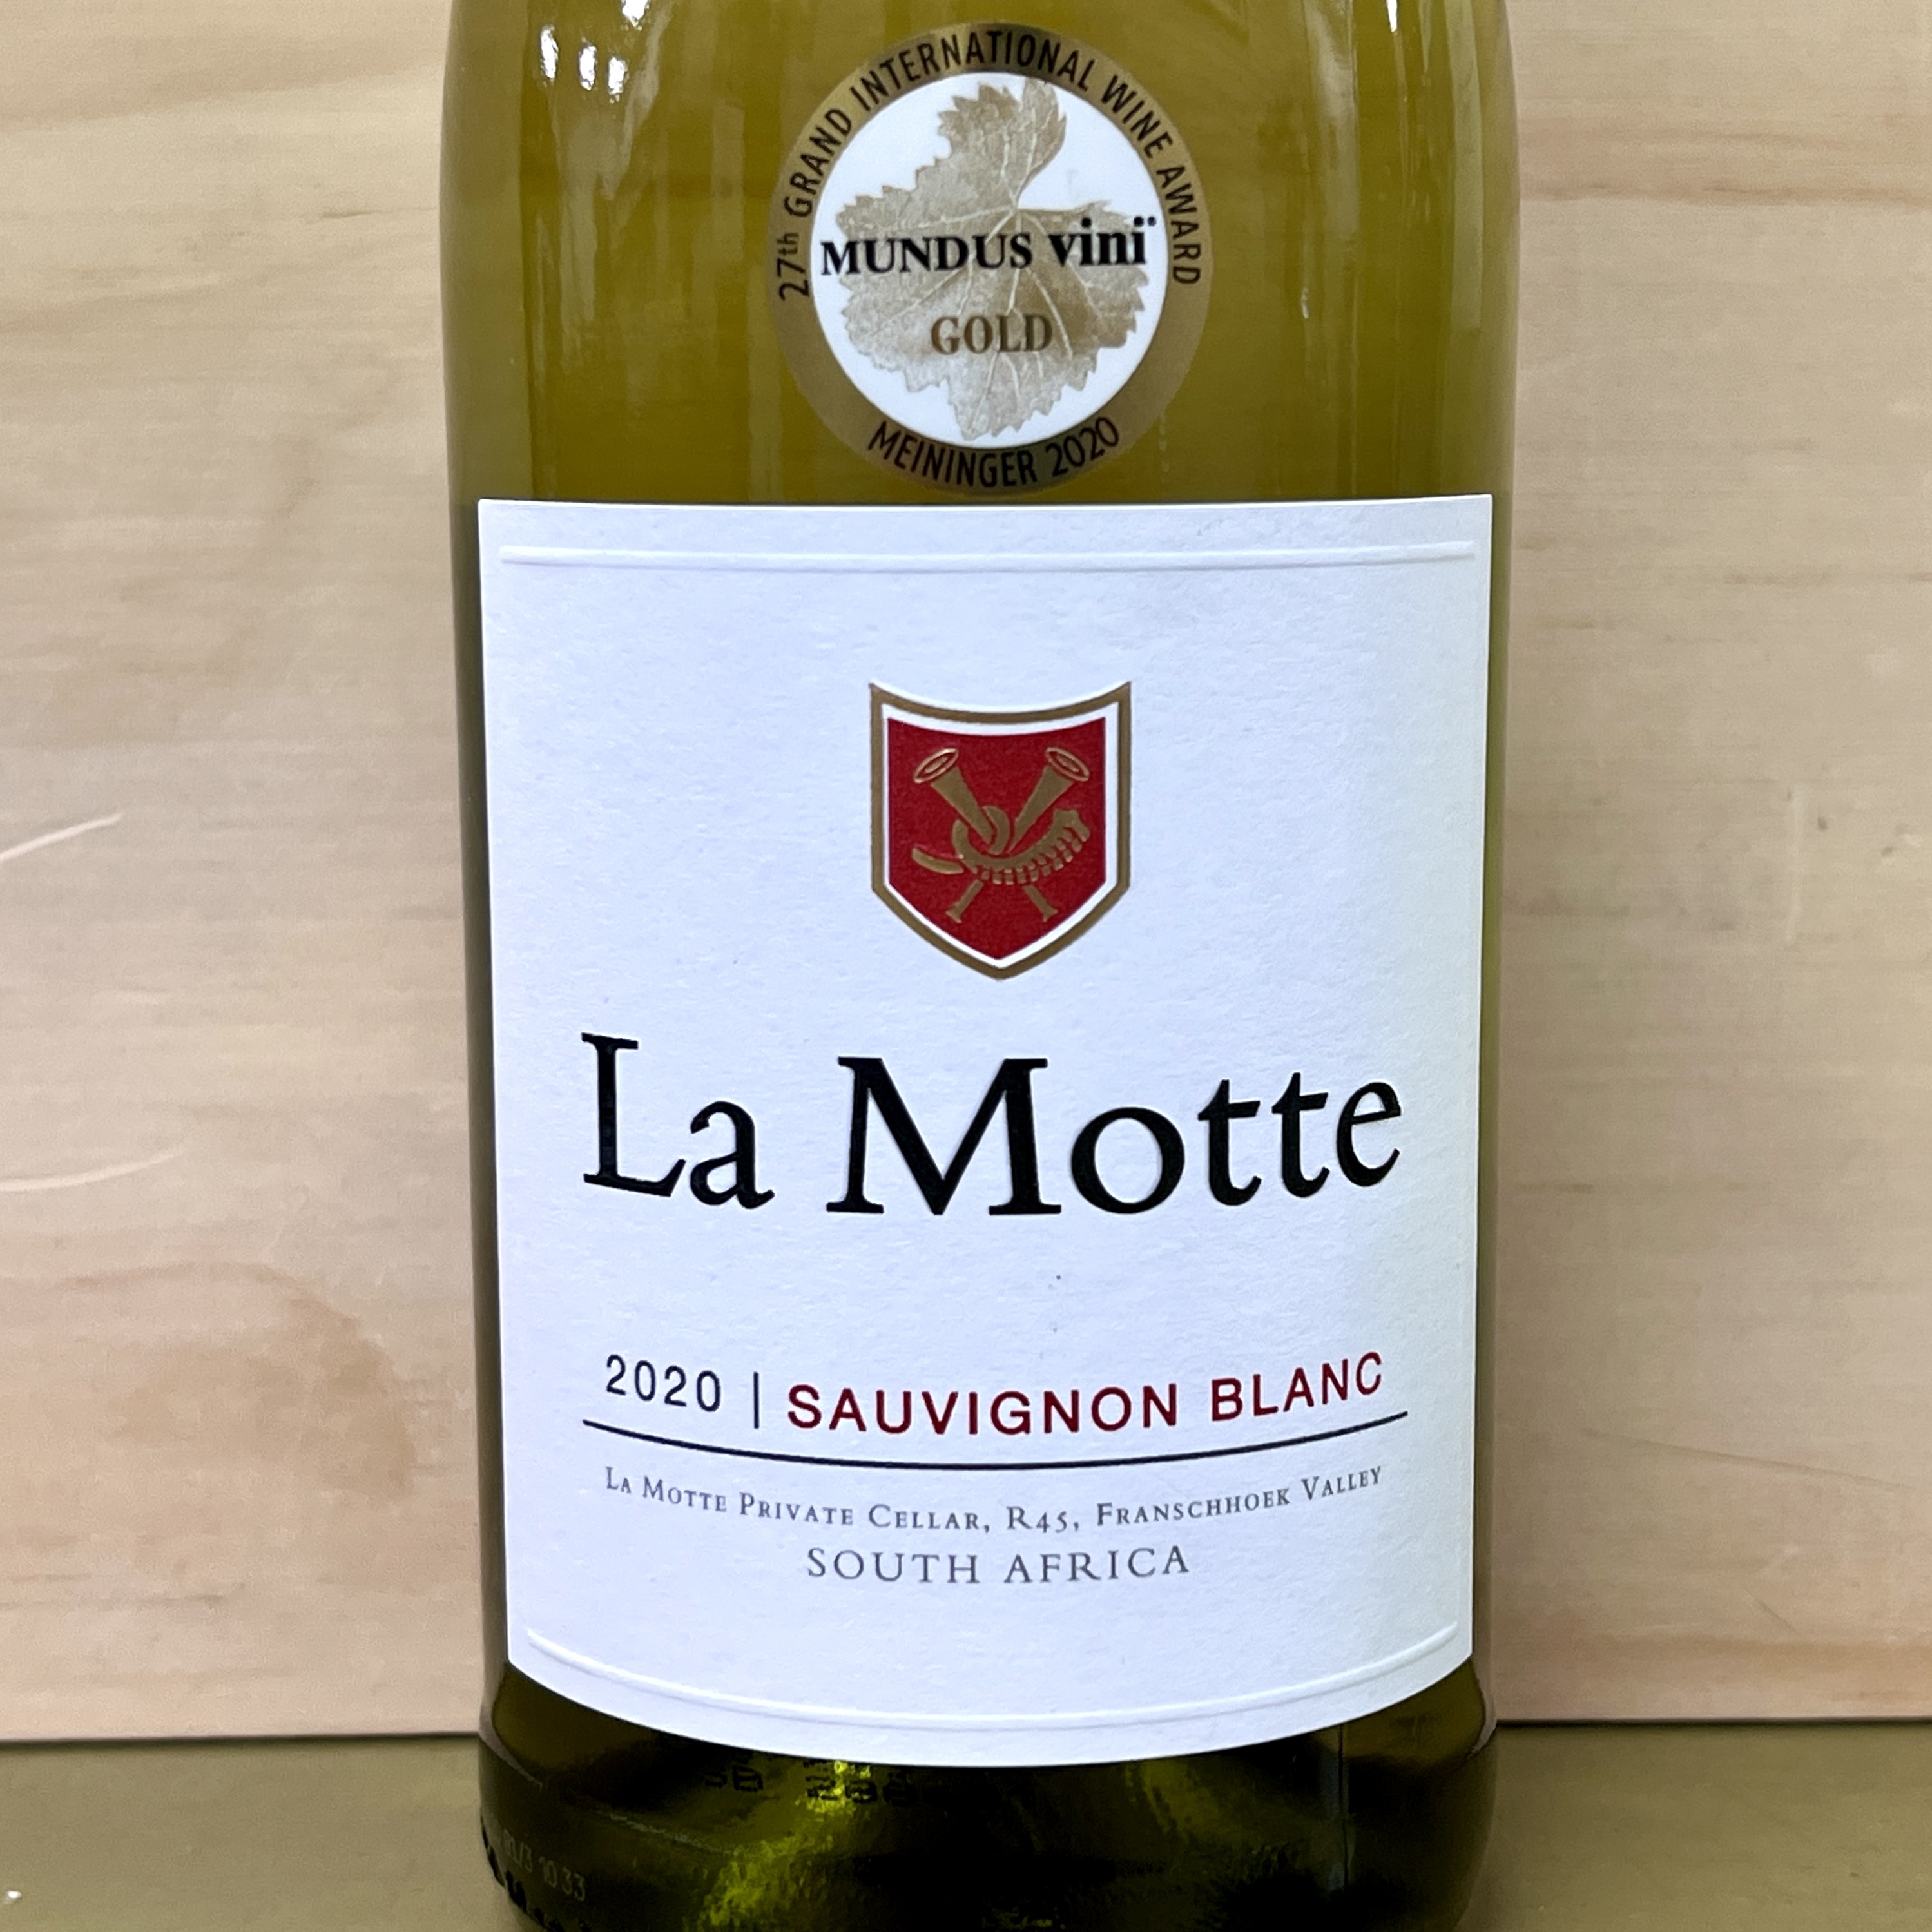 La Motte Sauvignon Blanc 2020